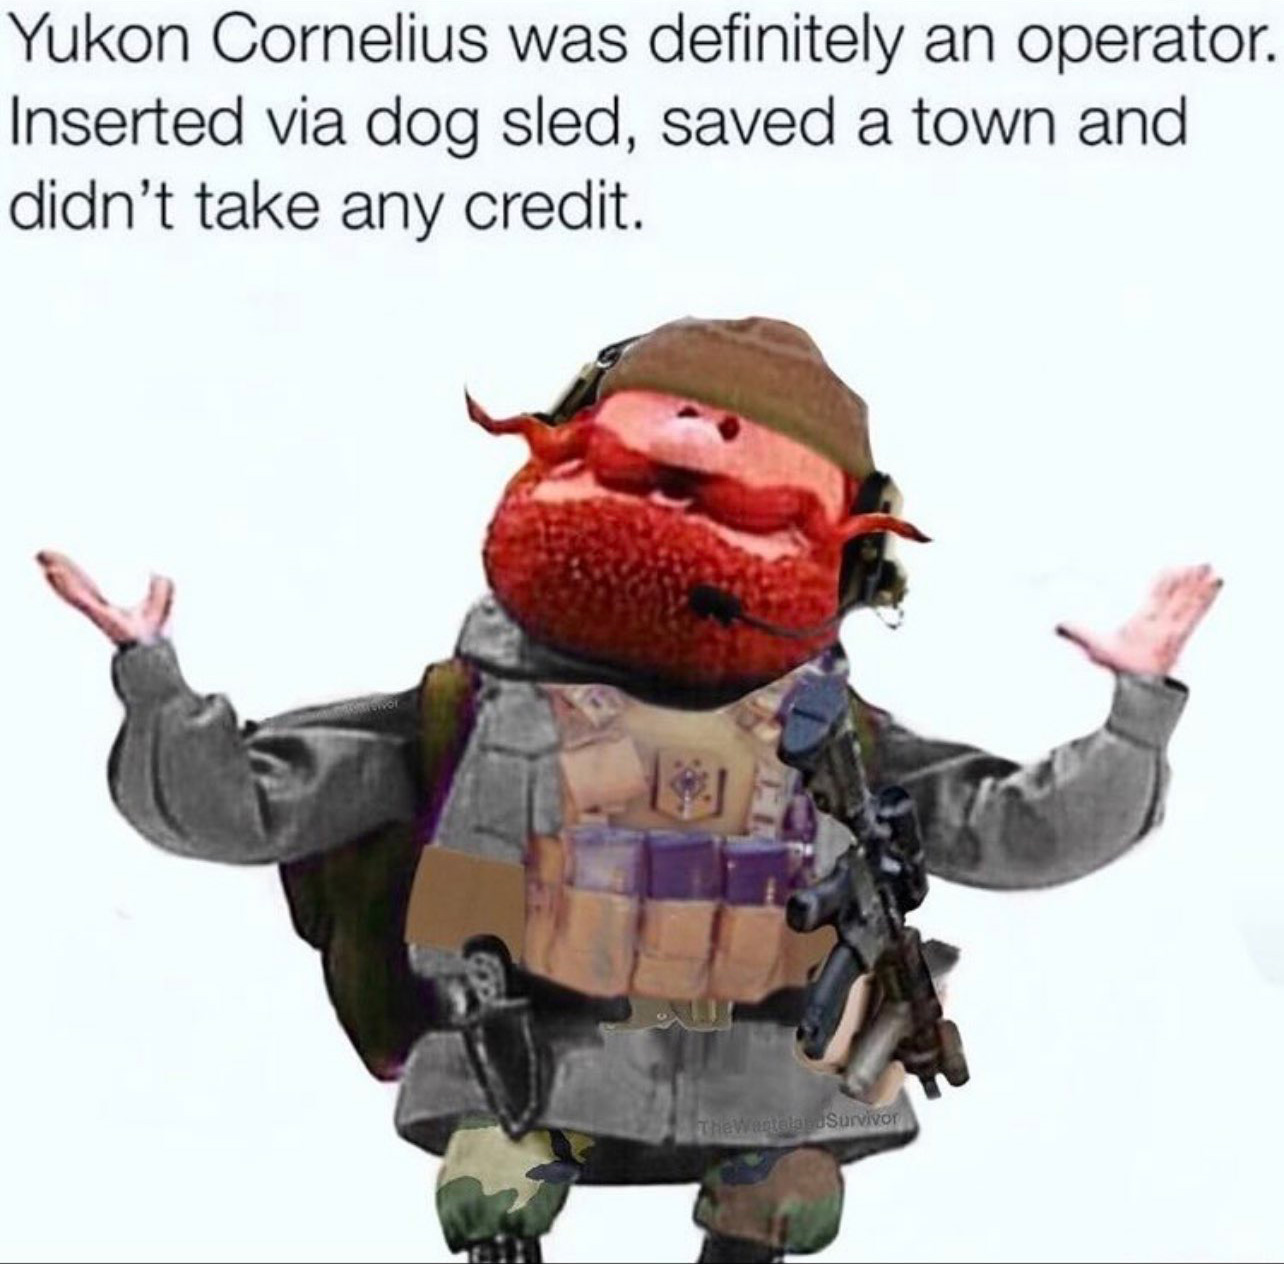 Yukon Cornelius in tactical operator gear, as God intended.